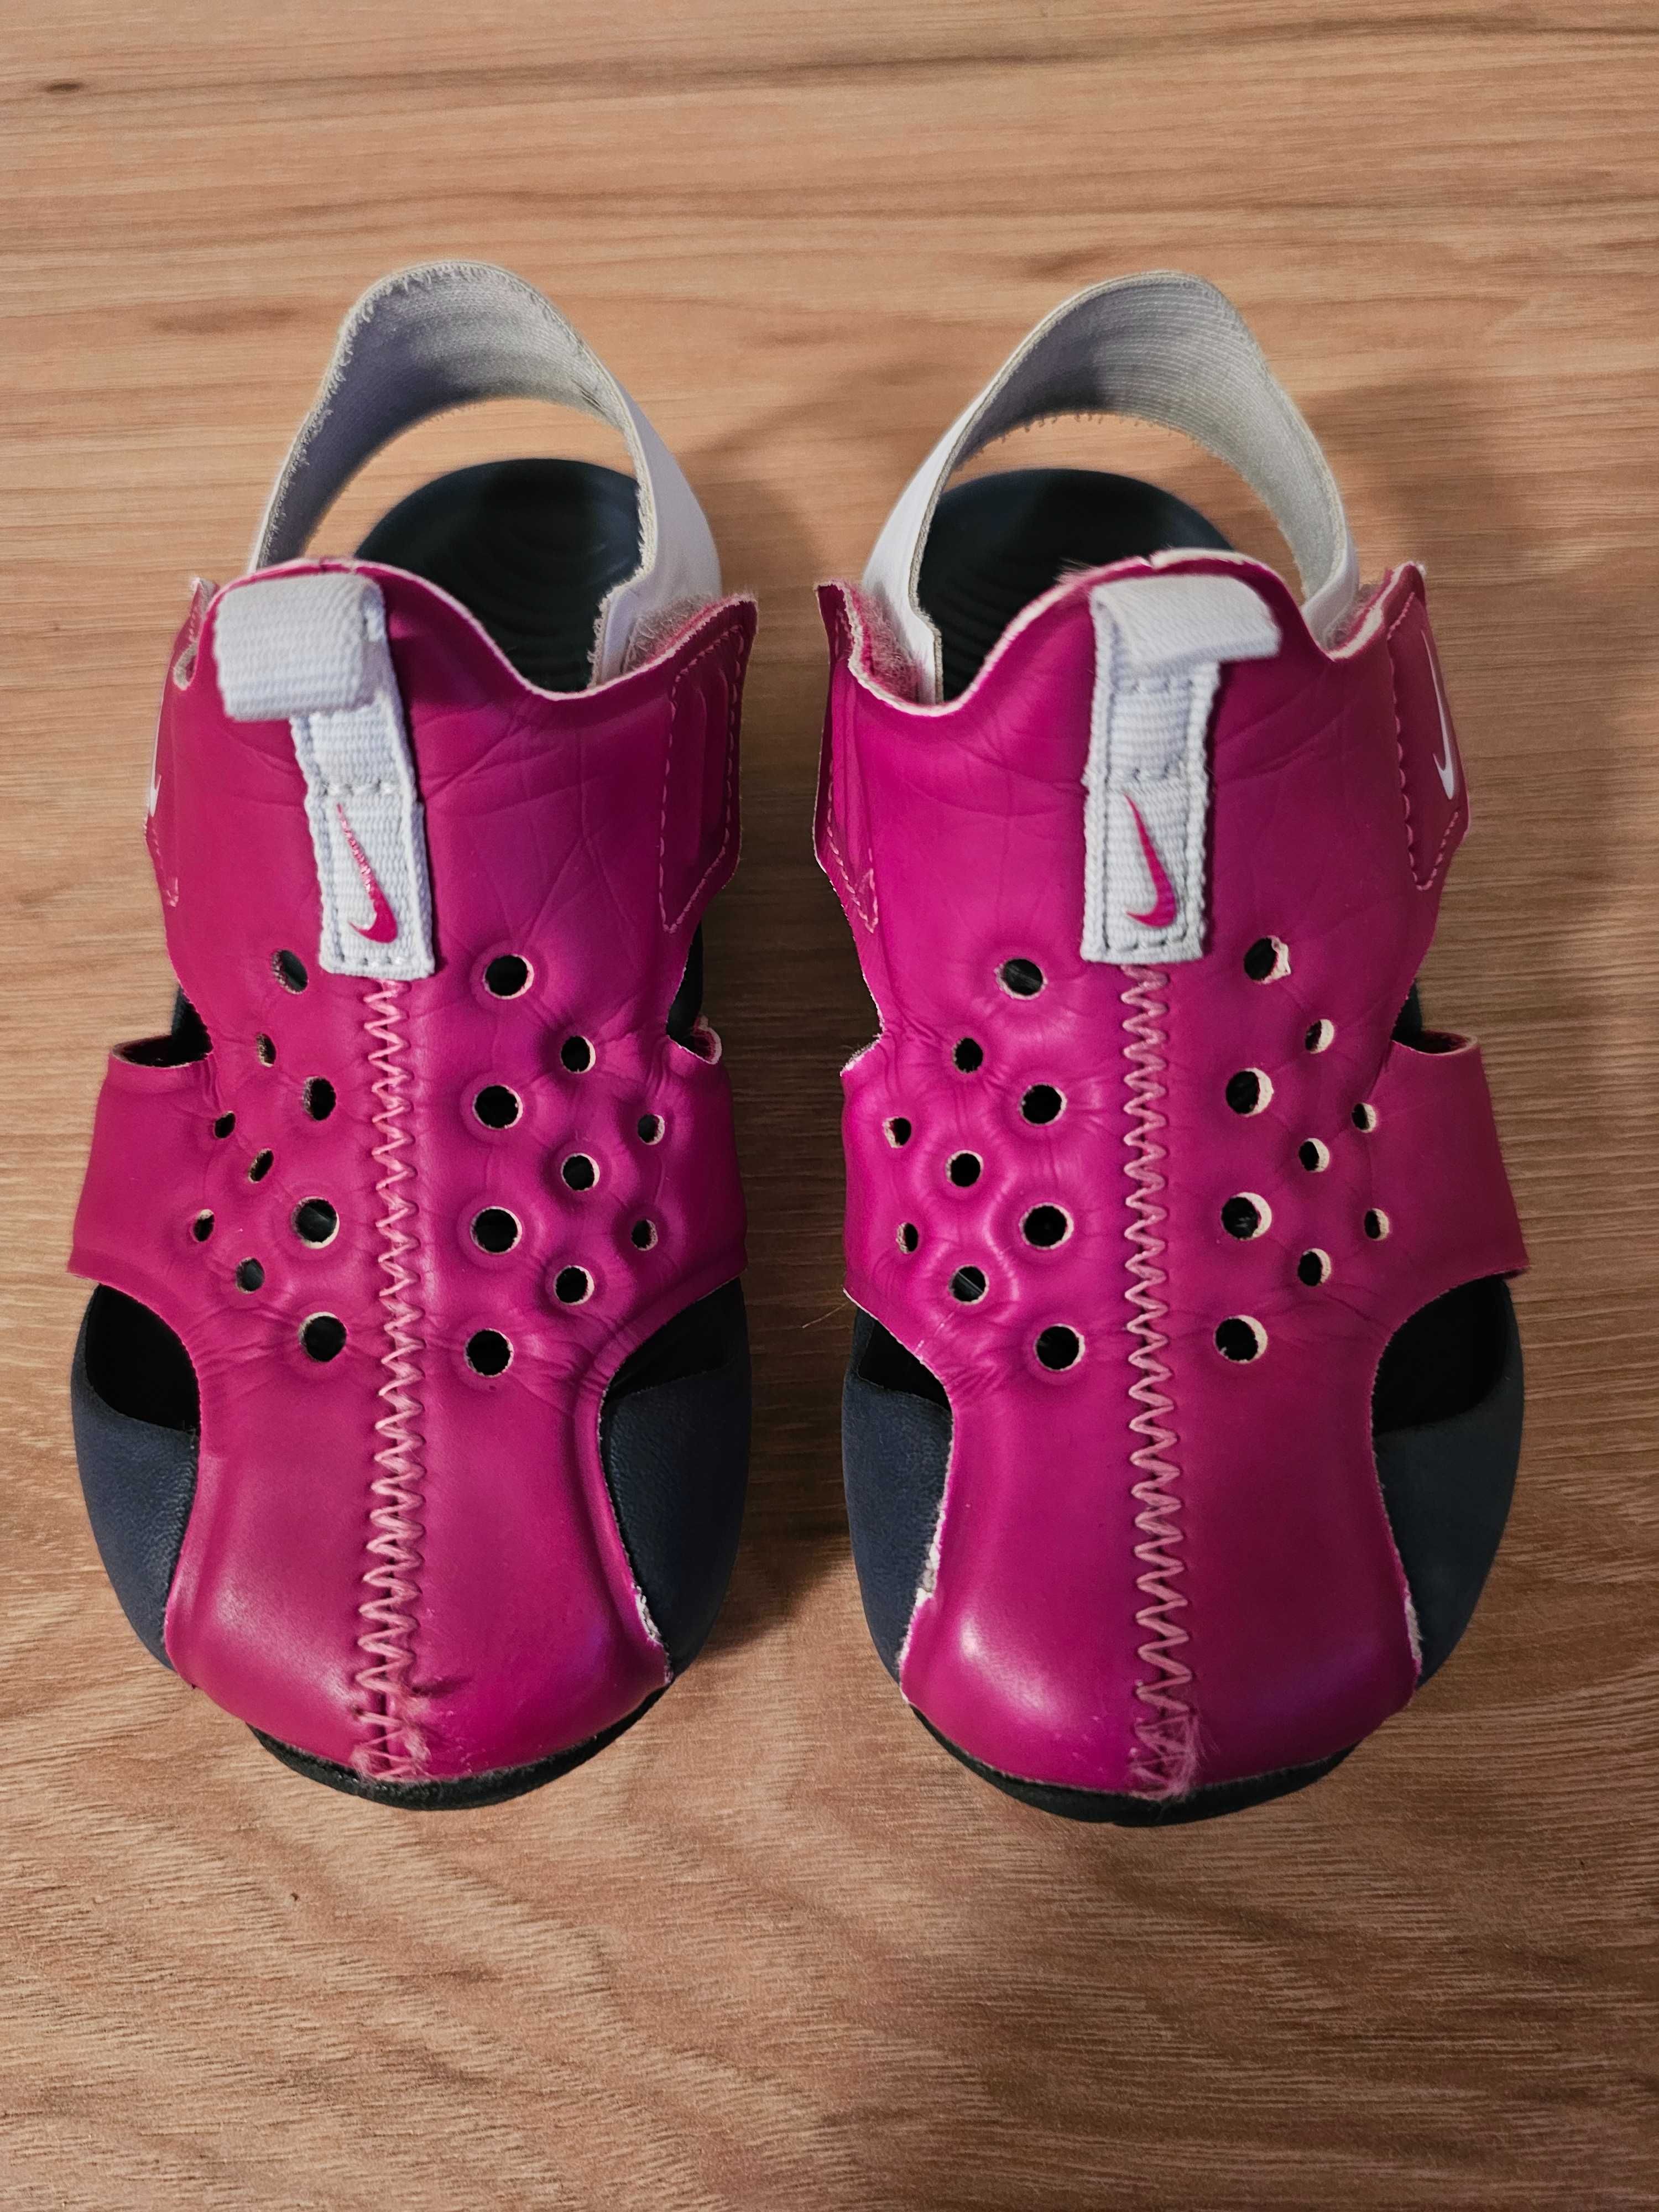 Sandały Nike Sunray różowe r. 26